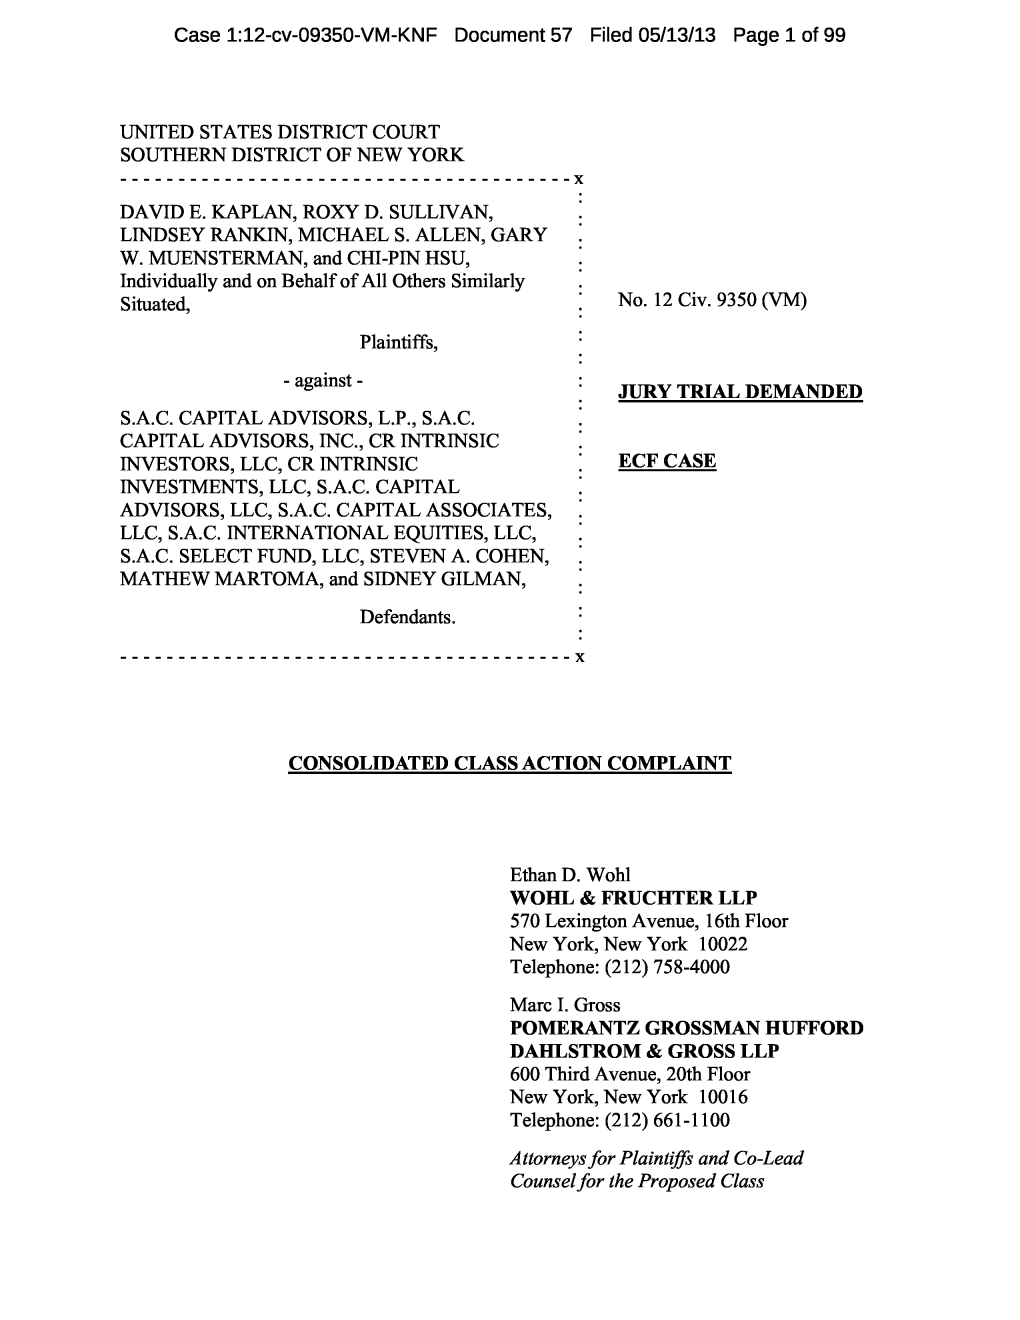 Kaplan V. S.A.C. Capital Advisors, L.P. 12-CV-09350-Jury Trial Demanded